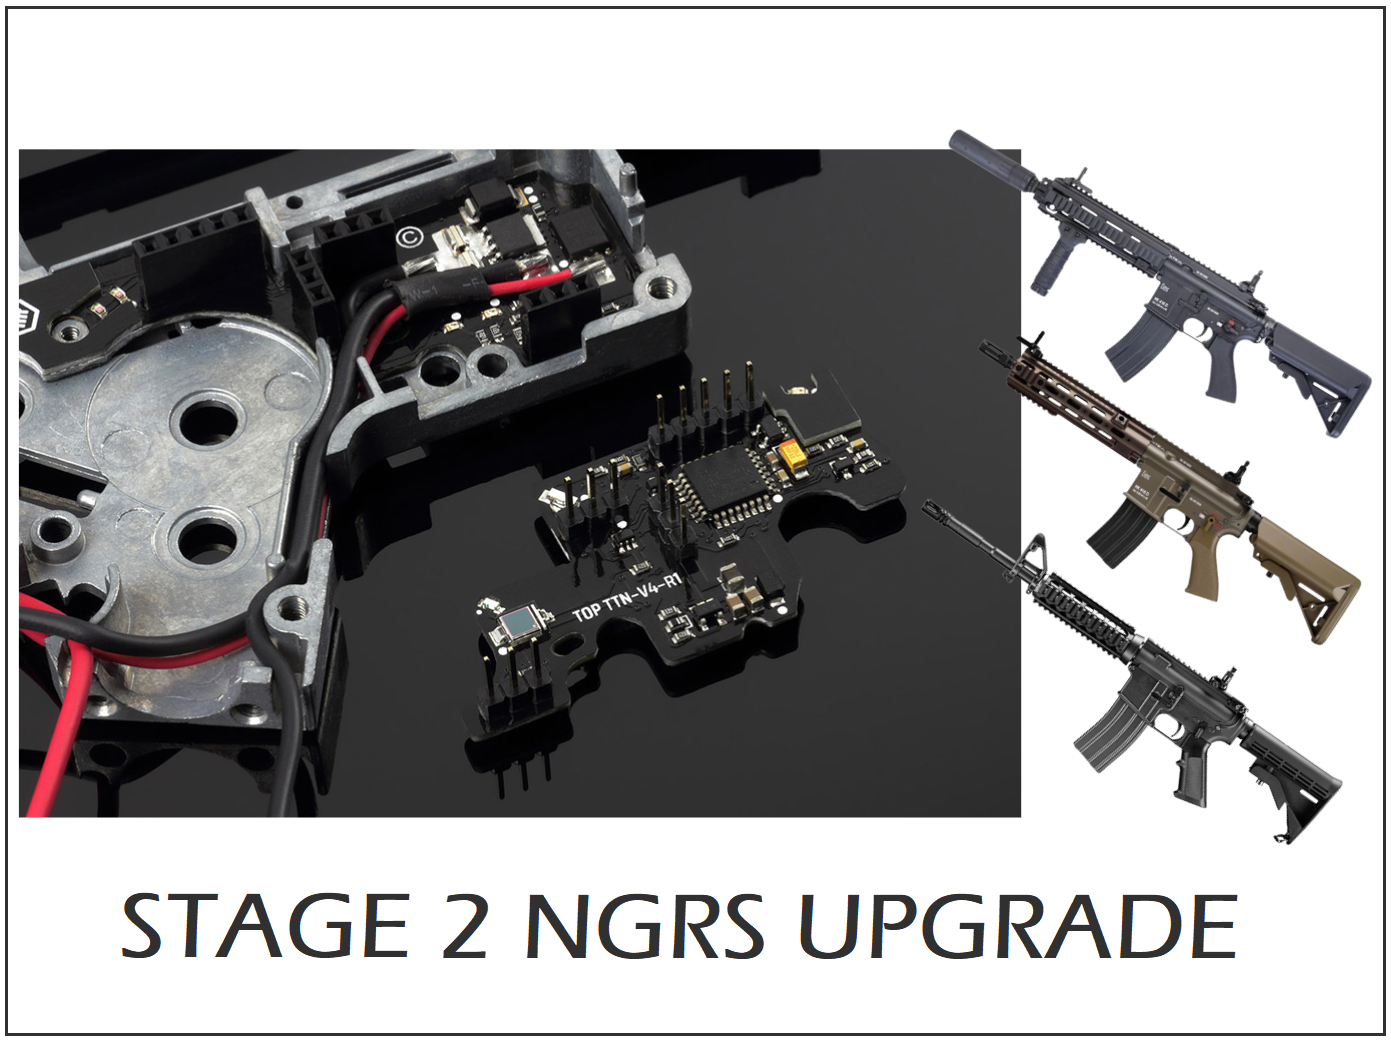 Stage 2 Upgrade - Tokyo Marui M4/416/MK18/URG-I Recoil Shock